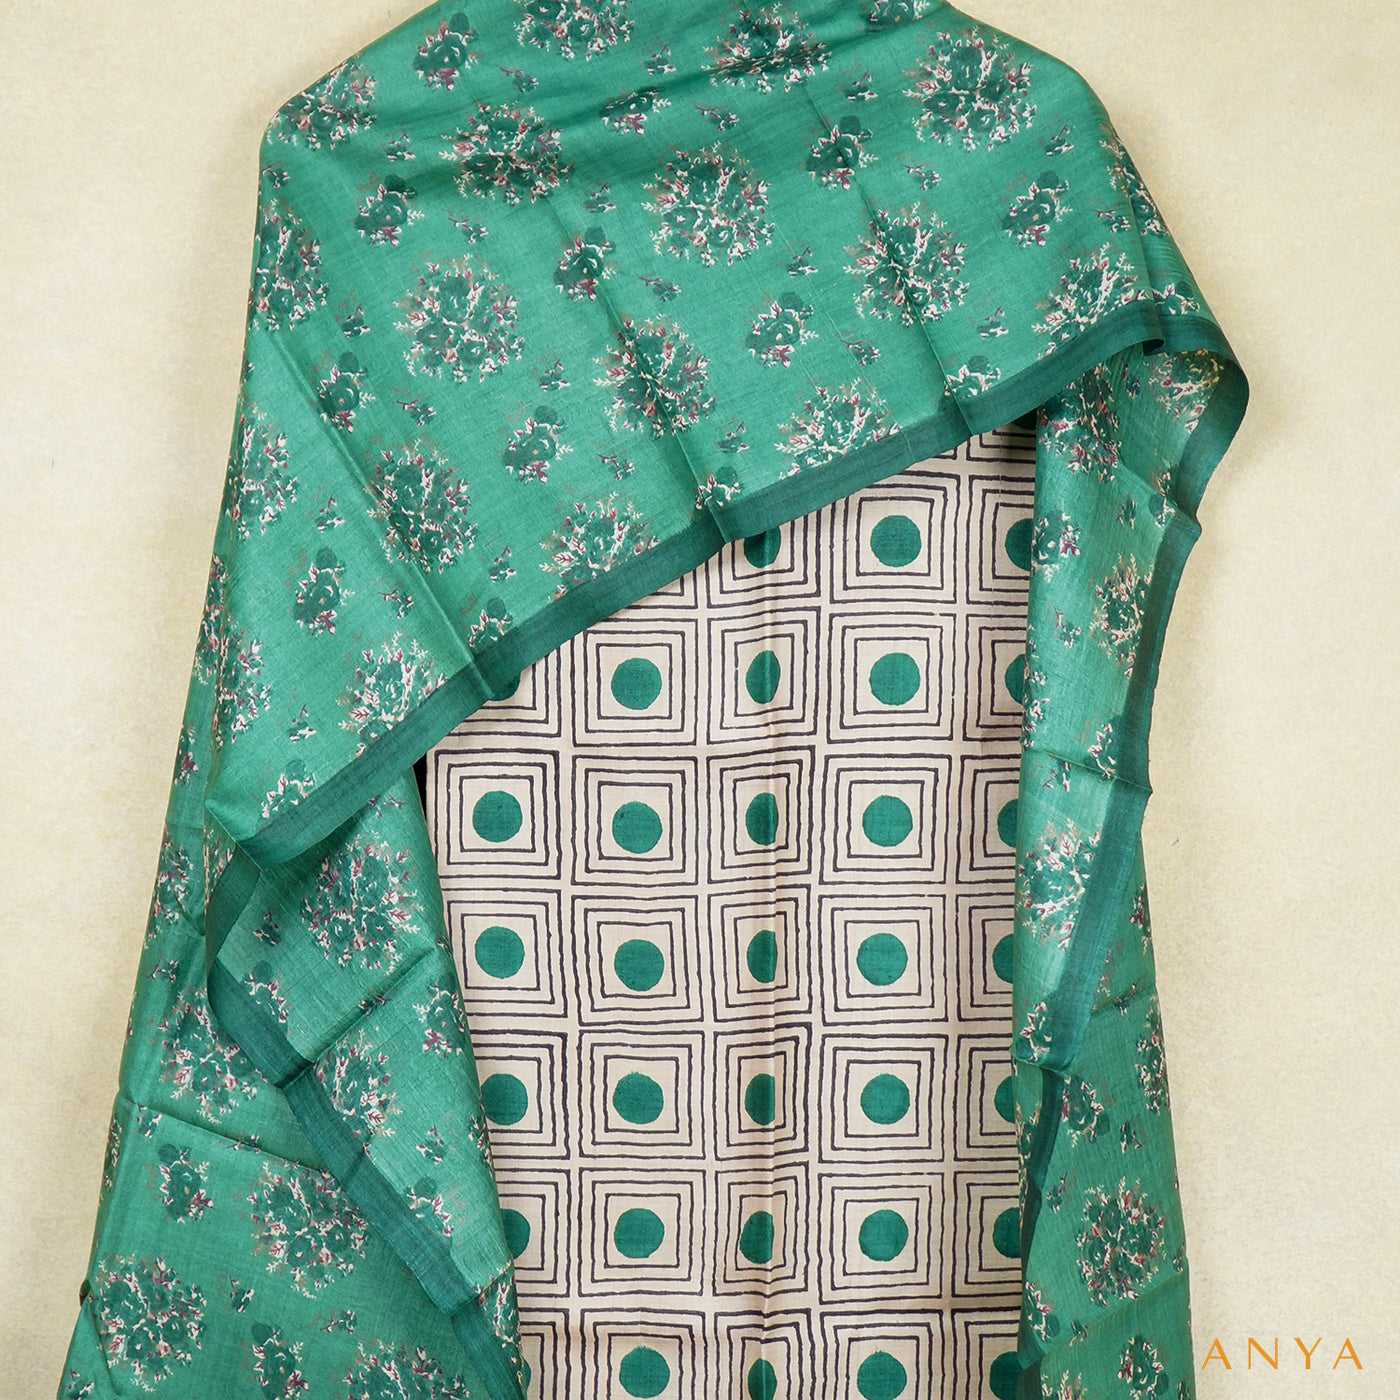 Off White Tussar Silk Salwar with Dark Green Floral Printed Dupatta